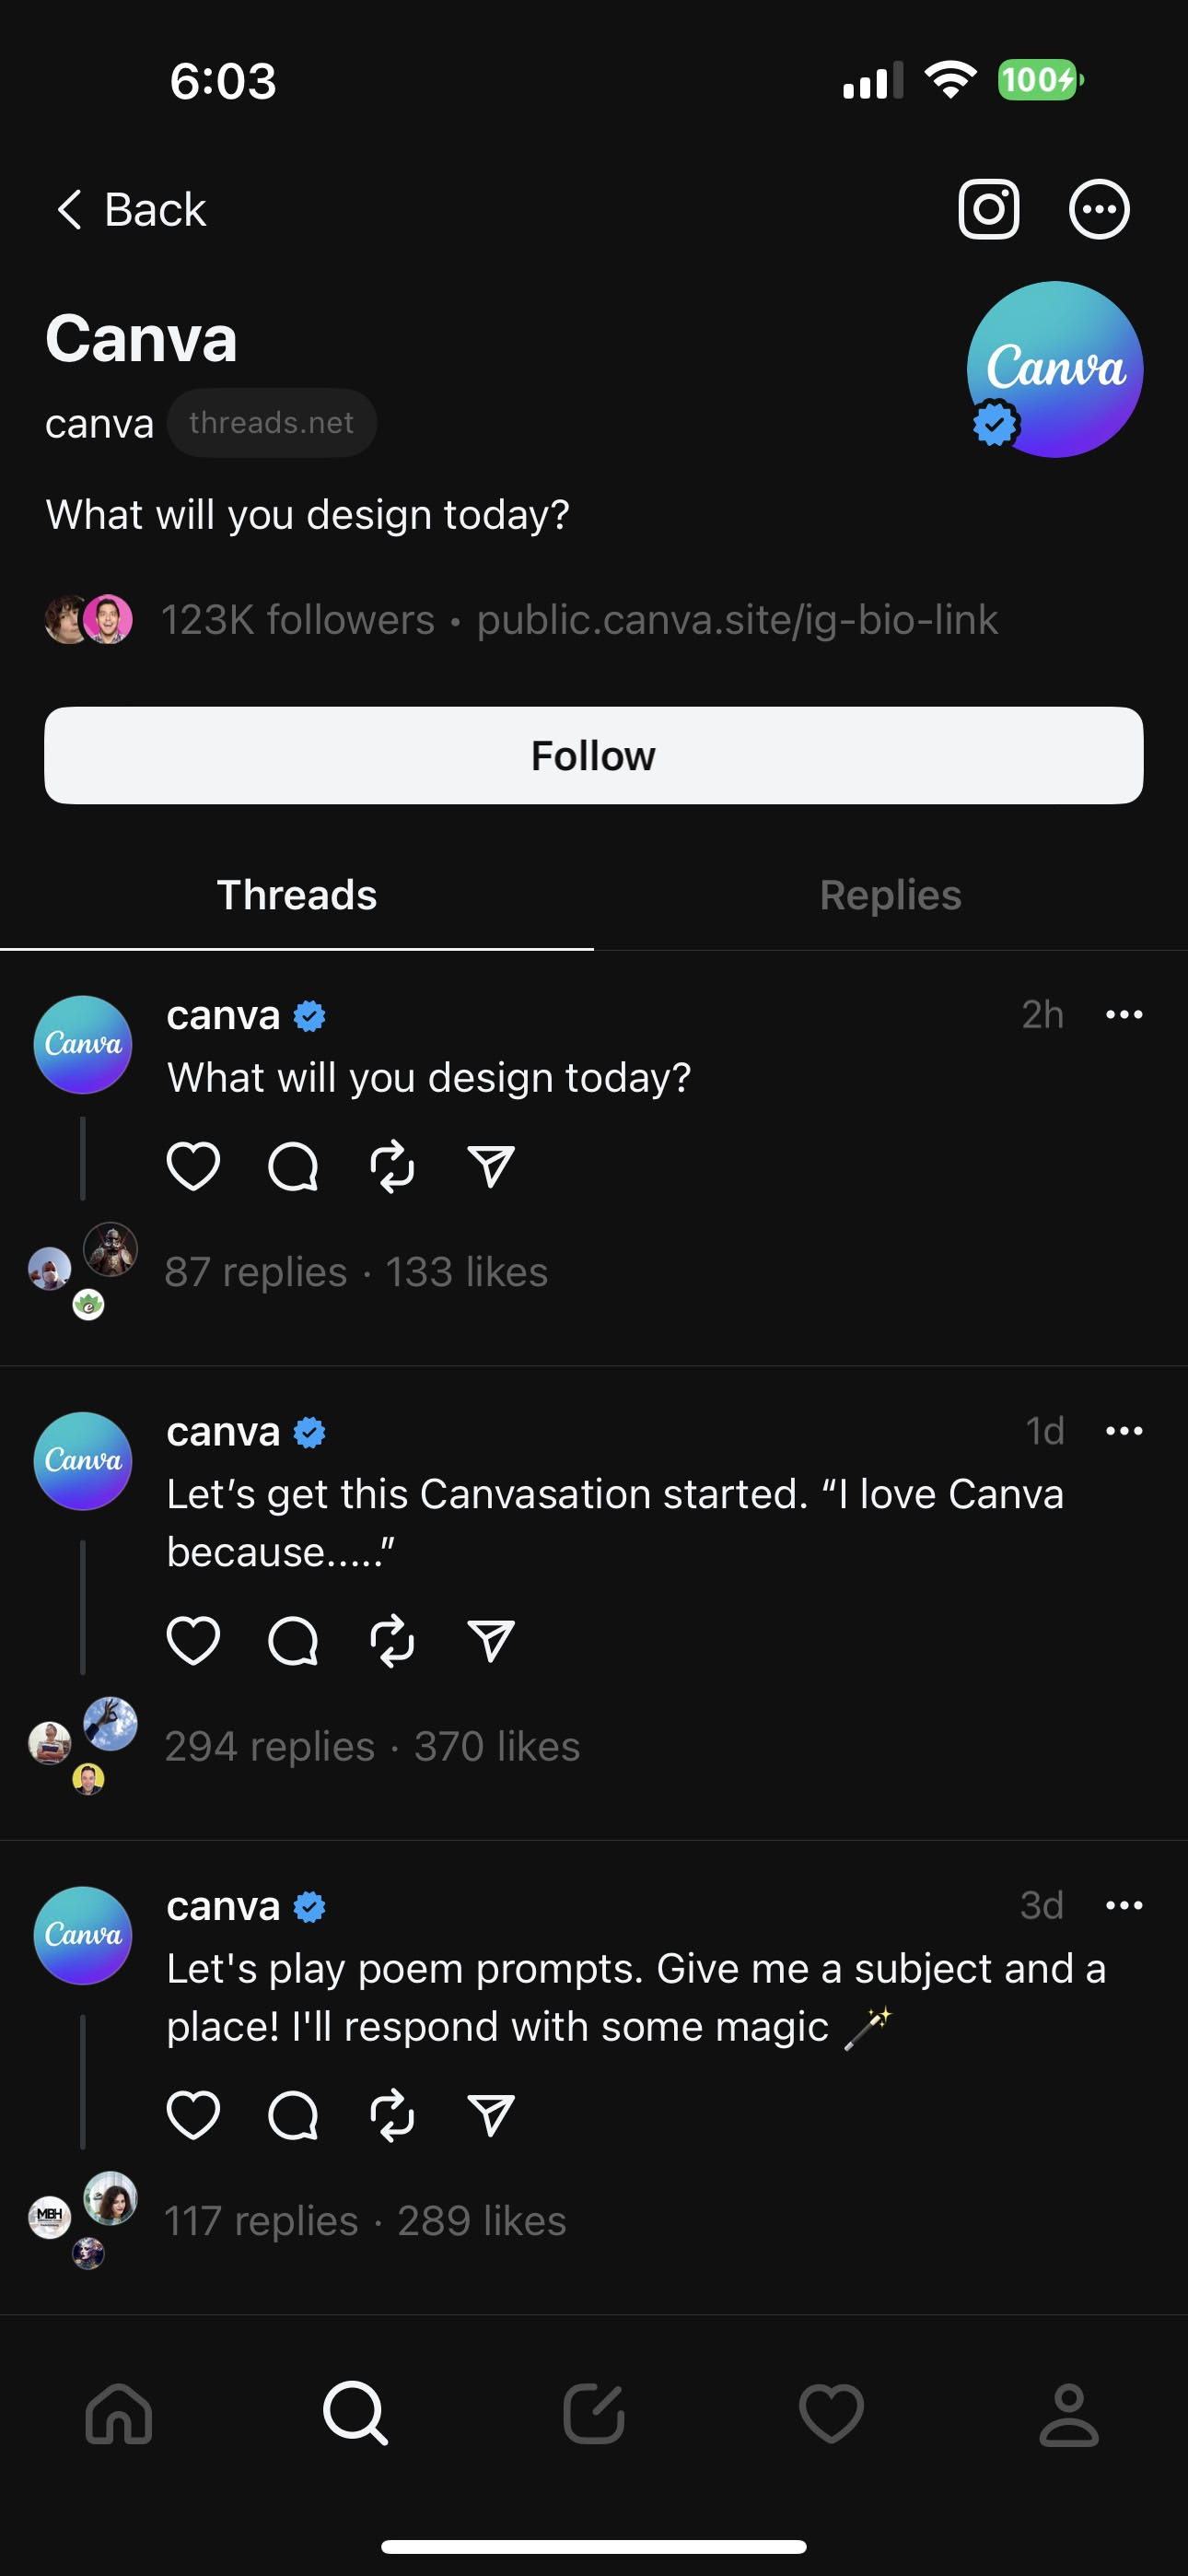 canva-on-instagram-threads-app